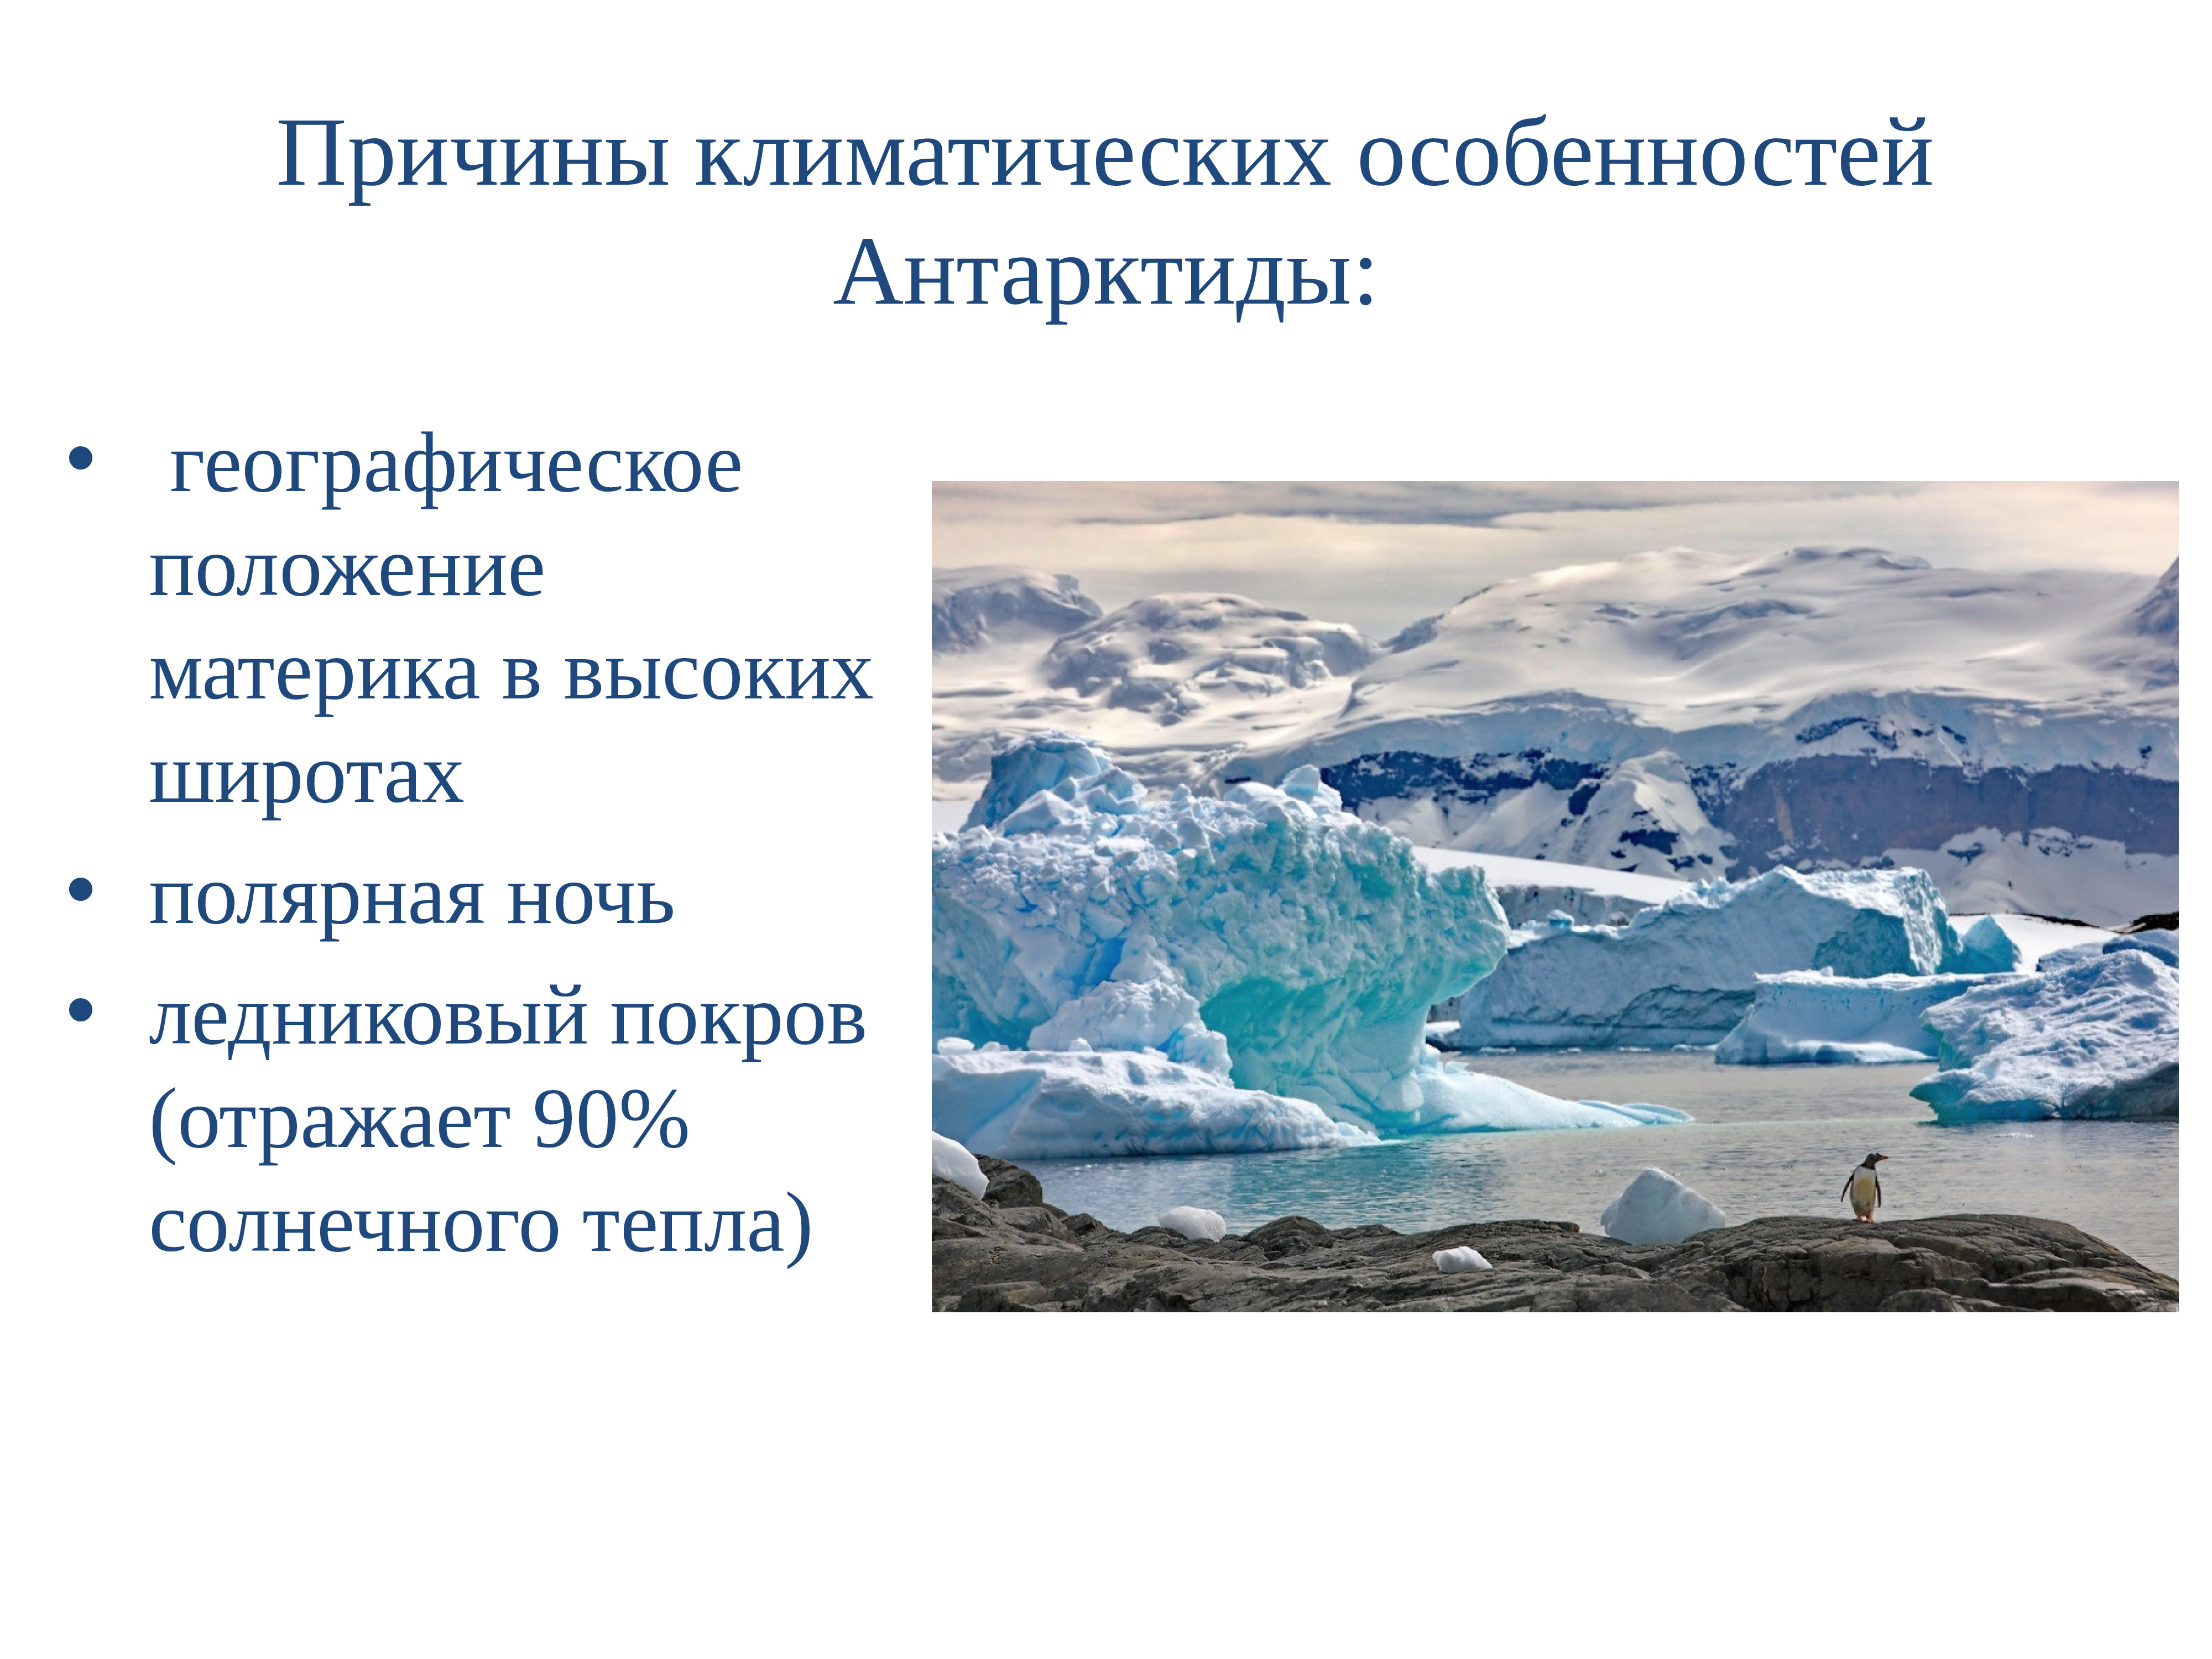 Каковы особенности природы антарктиды. Климат Антарктиды 7 класс география. Особенности Антарктиды. Материк Антарктида климат. Климат Антарктиды презентация.